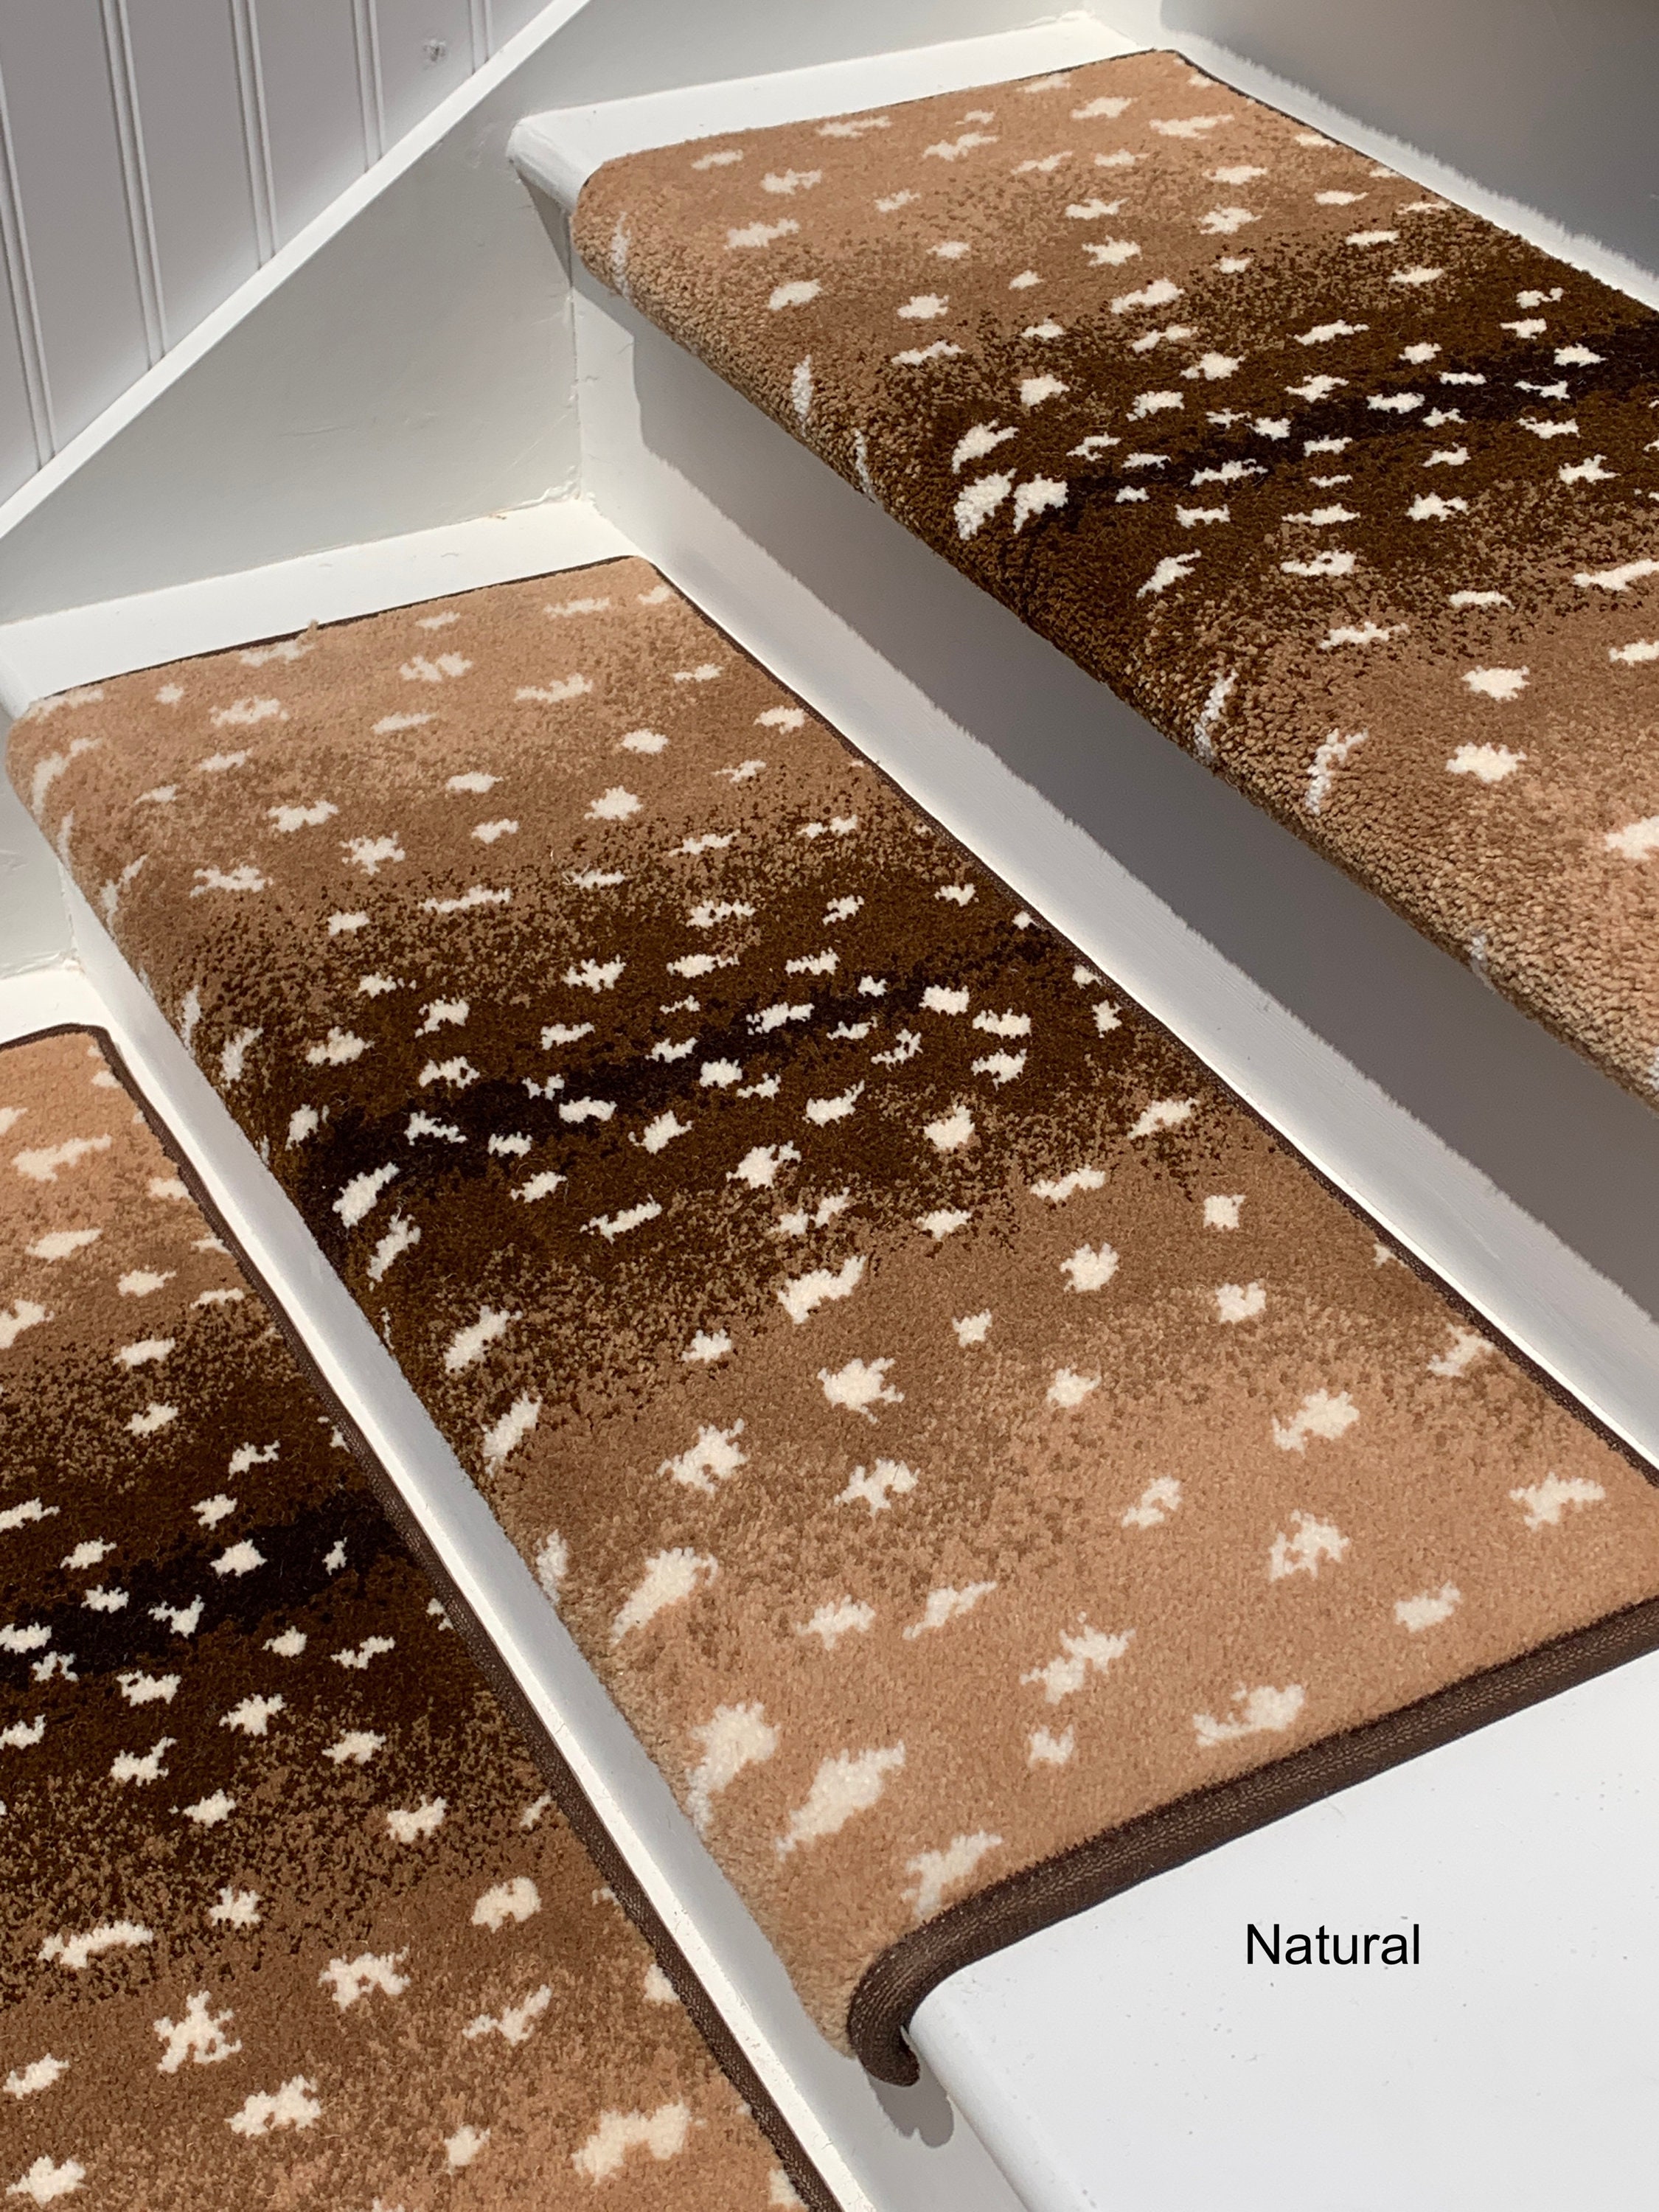 Chocolate Brown Skid Resistant Carpet Stair Treads